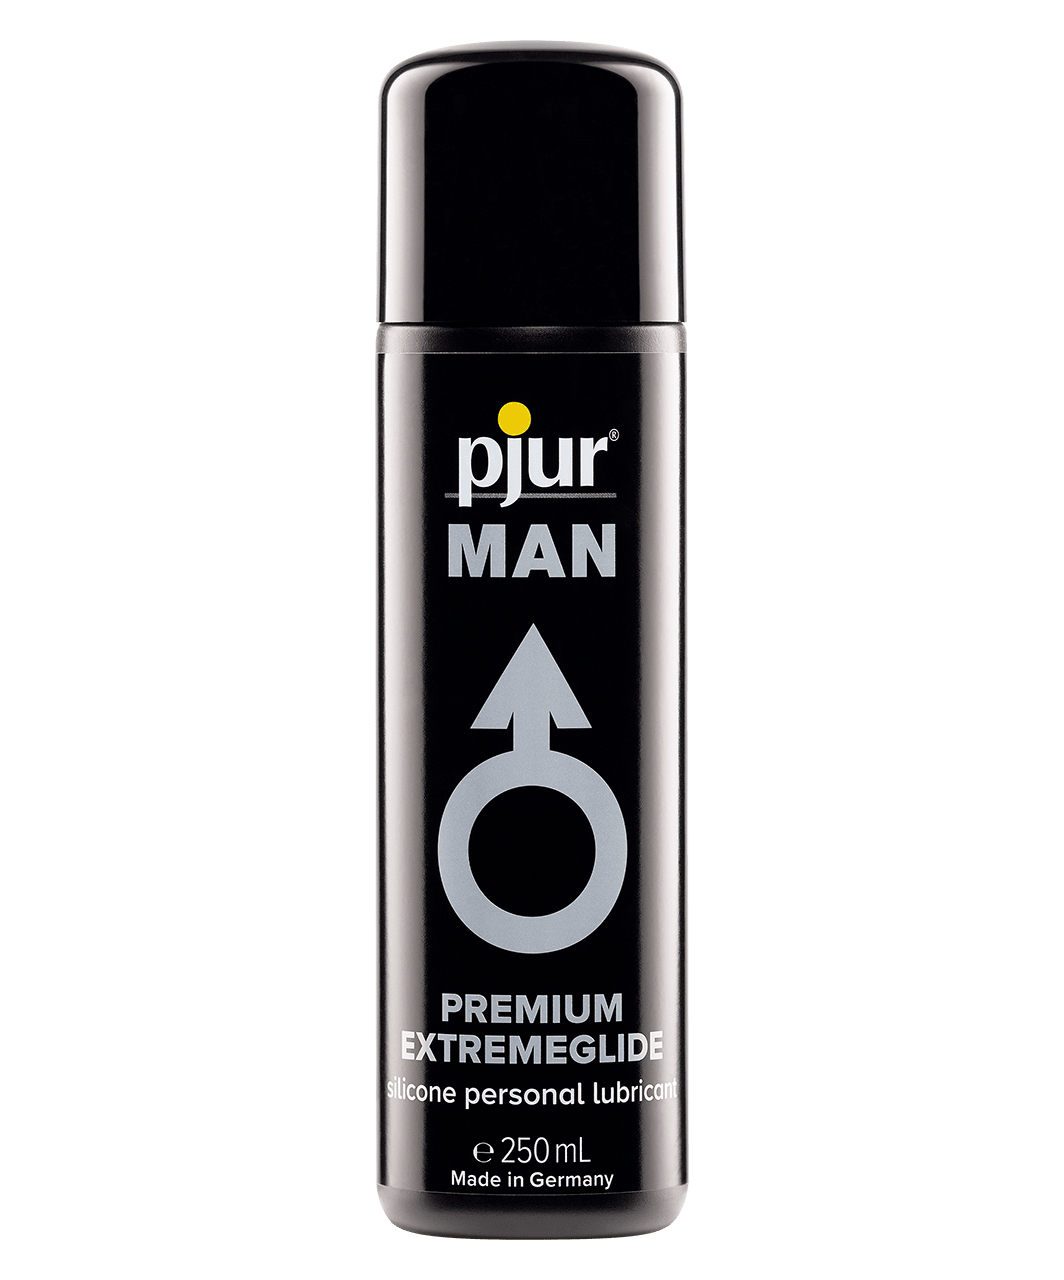 pjur Man Premium Extremeglide lubrikants (100 / 250 ml)